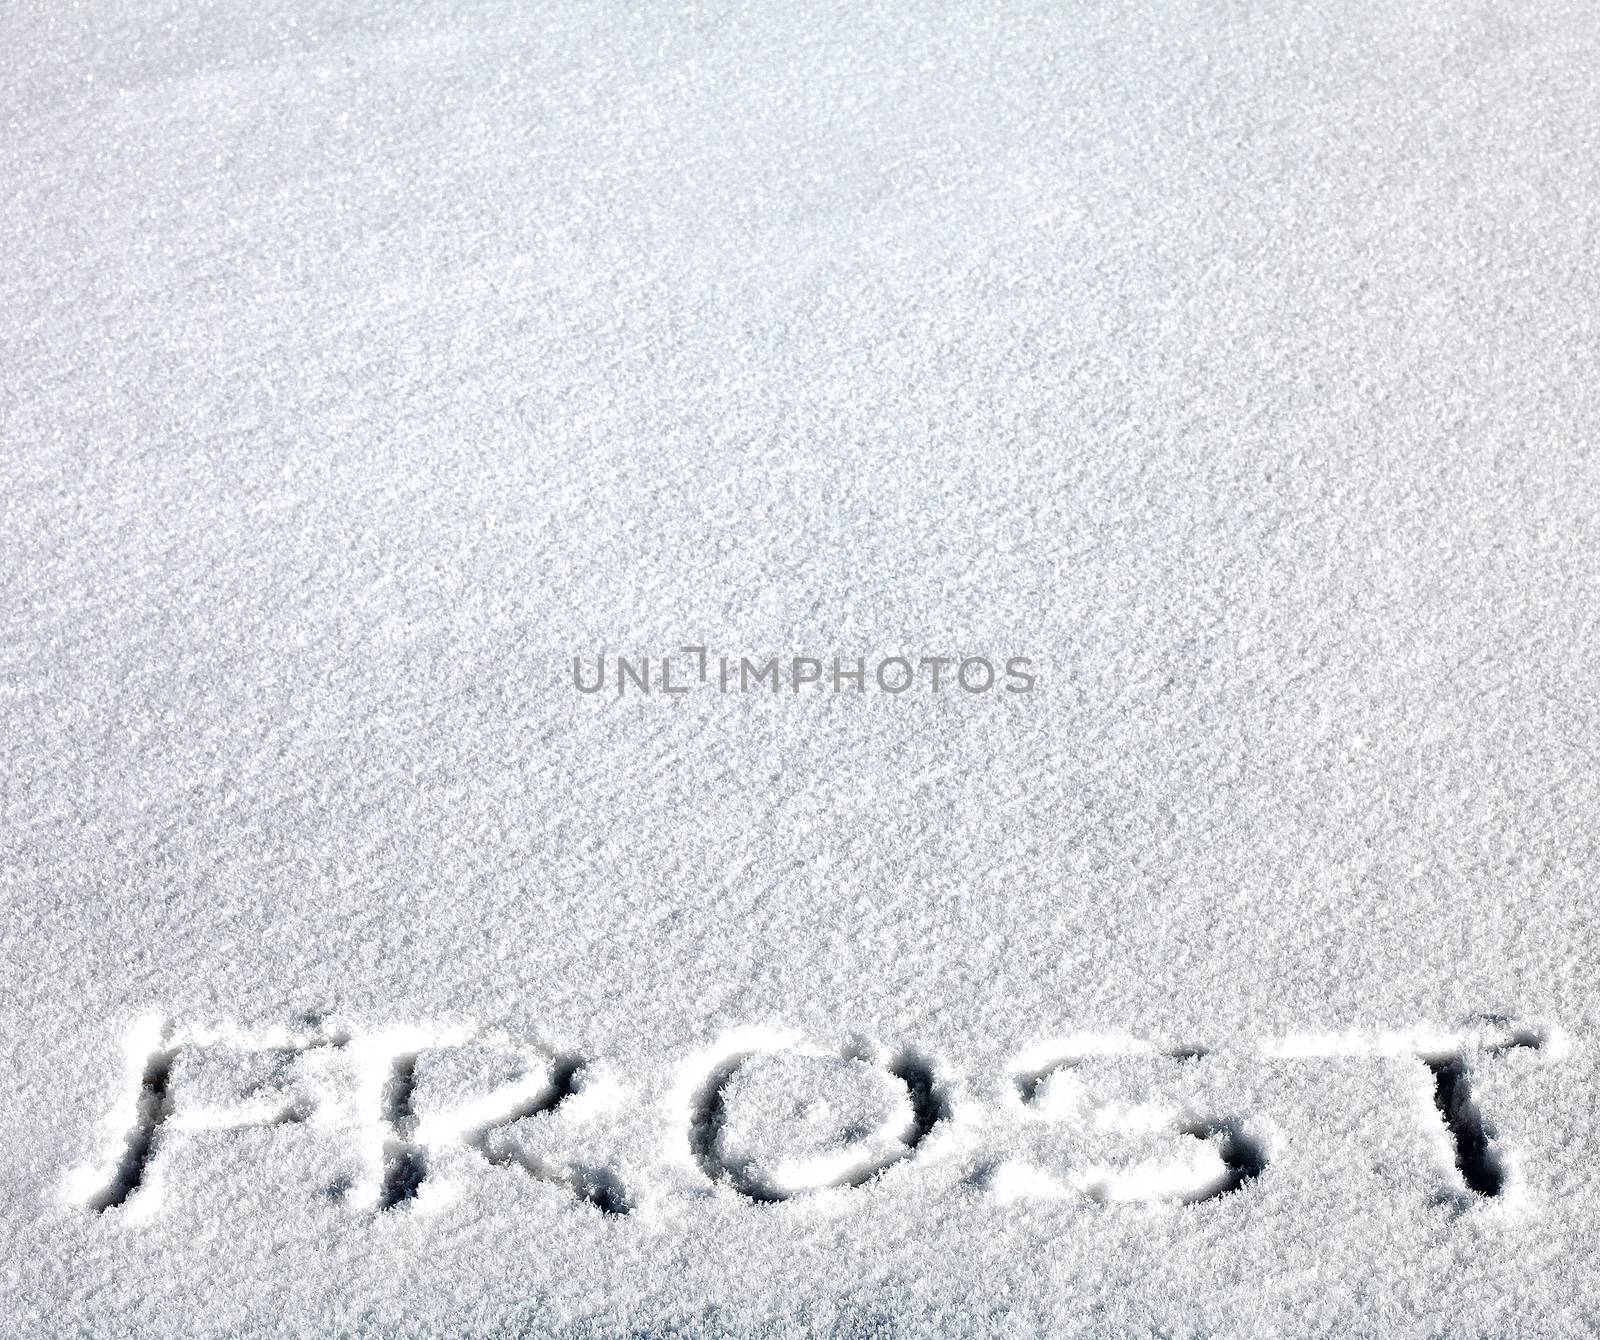 Handwritten Inscription Frost on the Snow